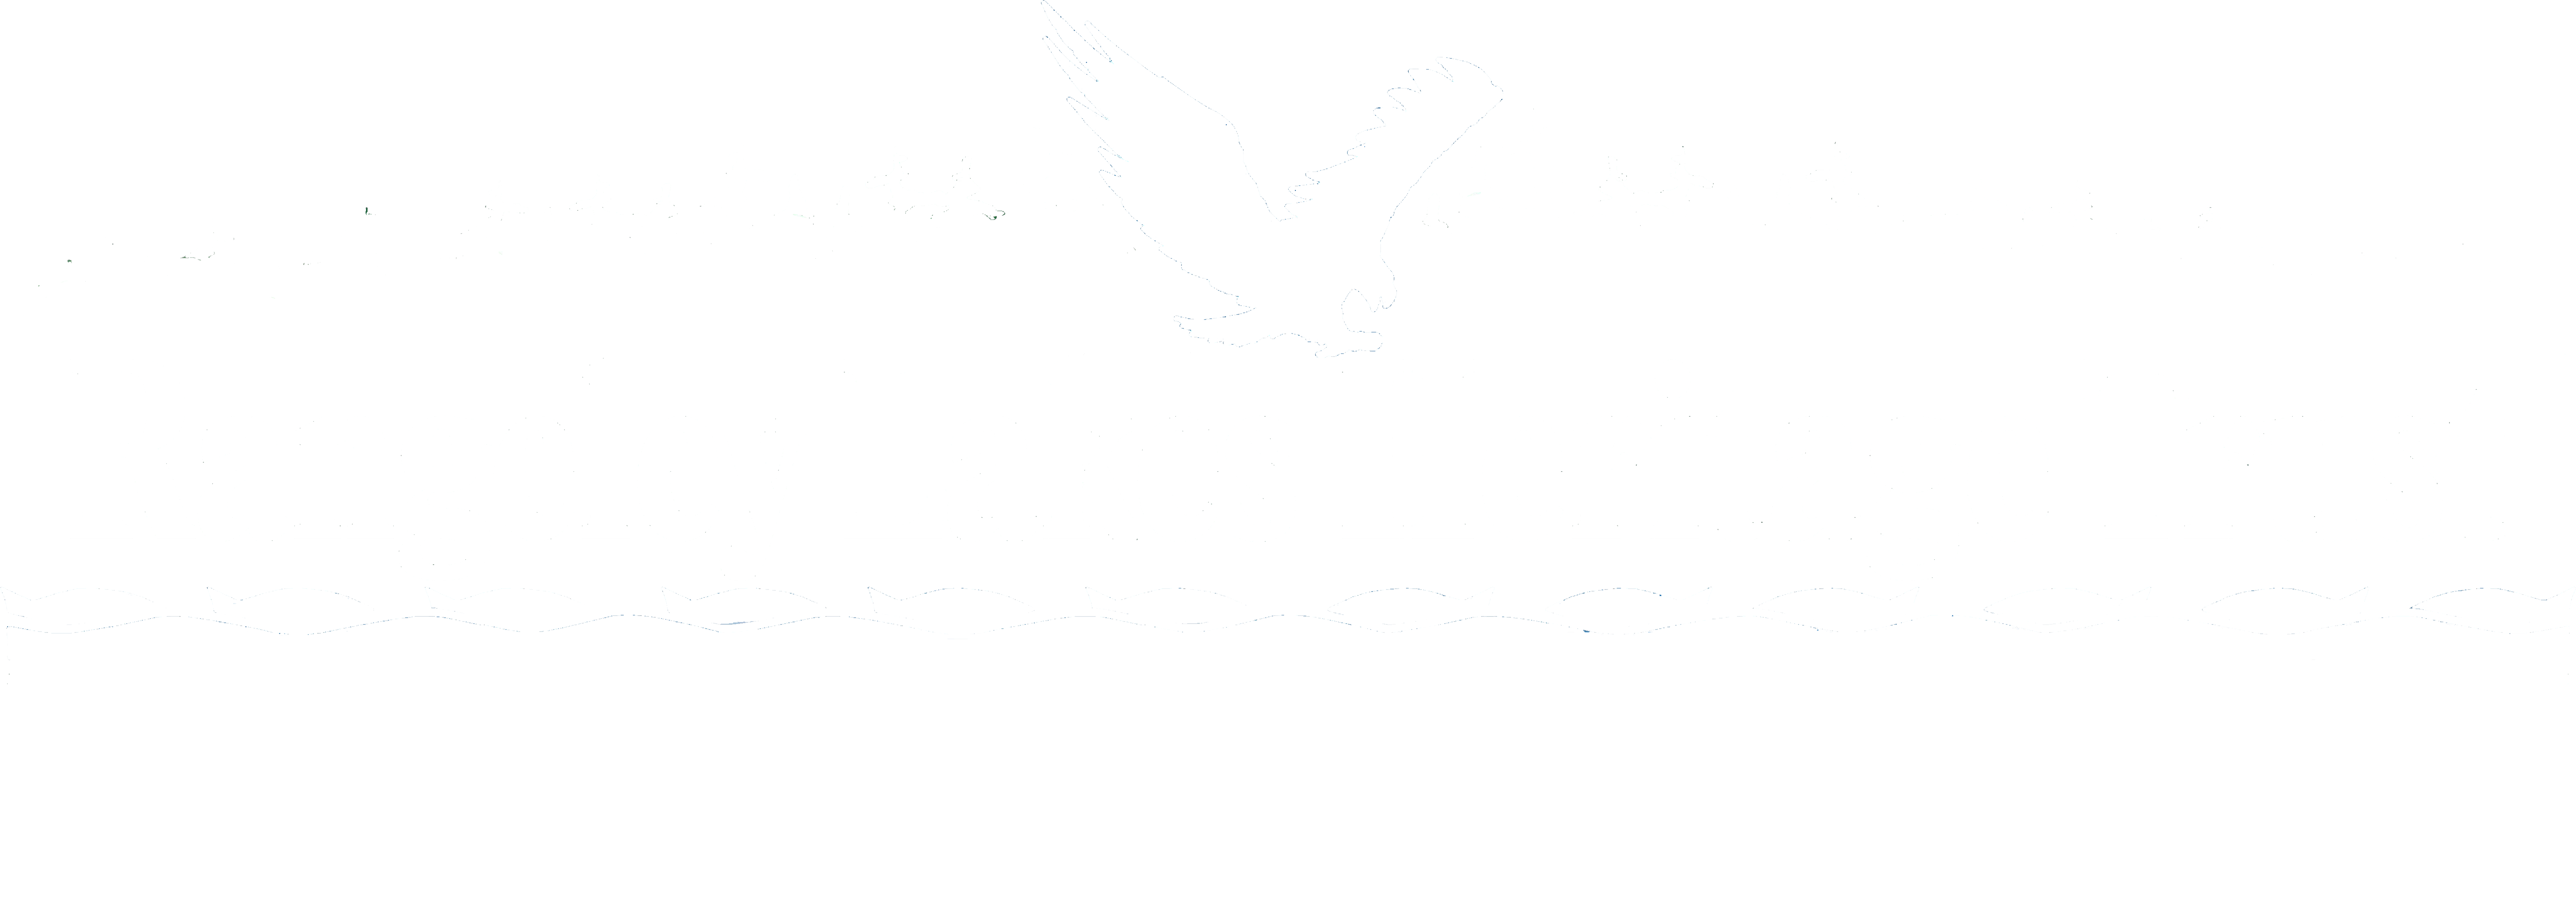 Rangeley Lakes Heritage Trust